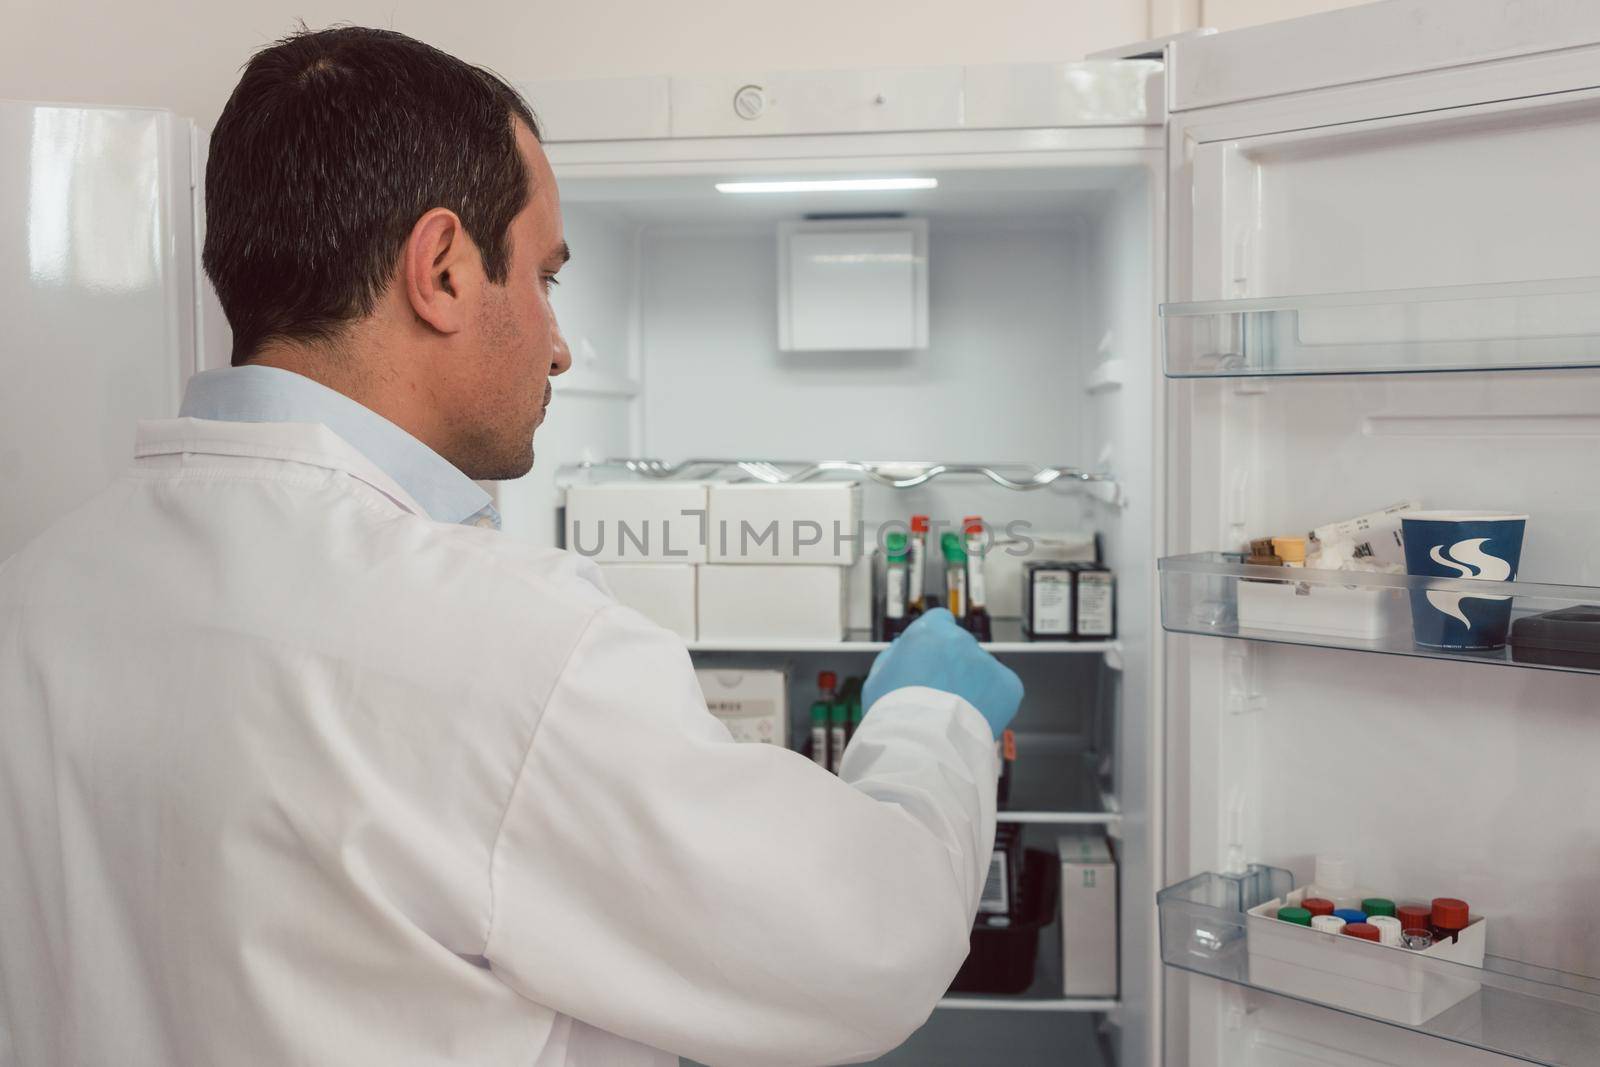 Lab technician storing blood samples in fridge by Kzenon